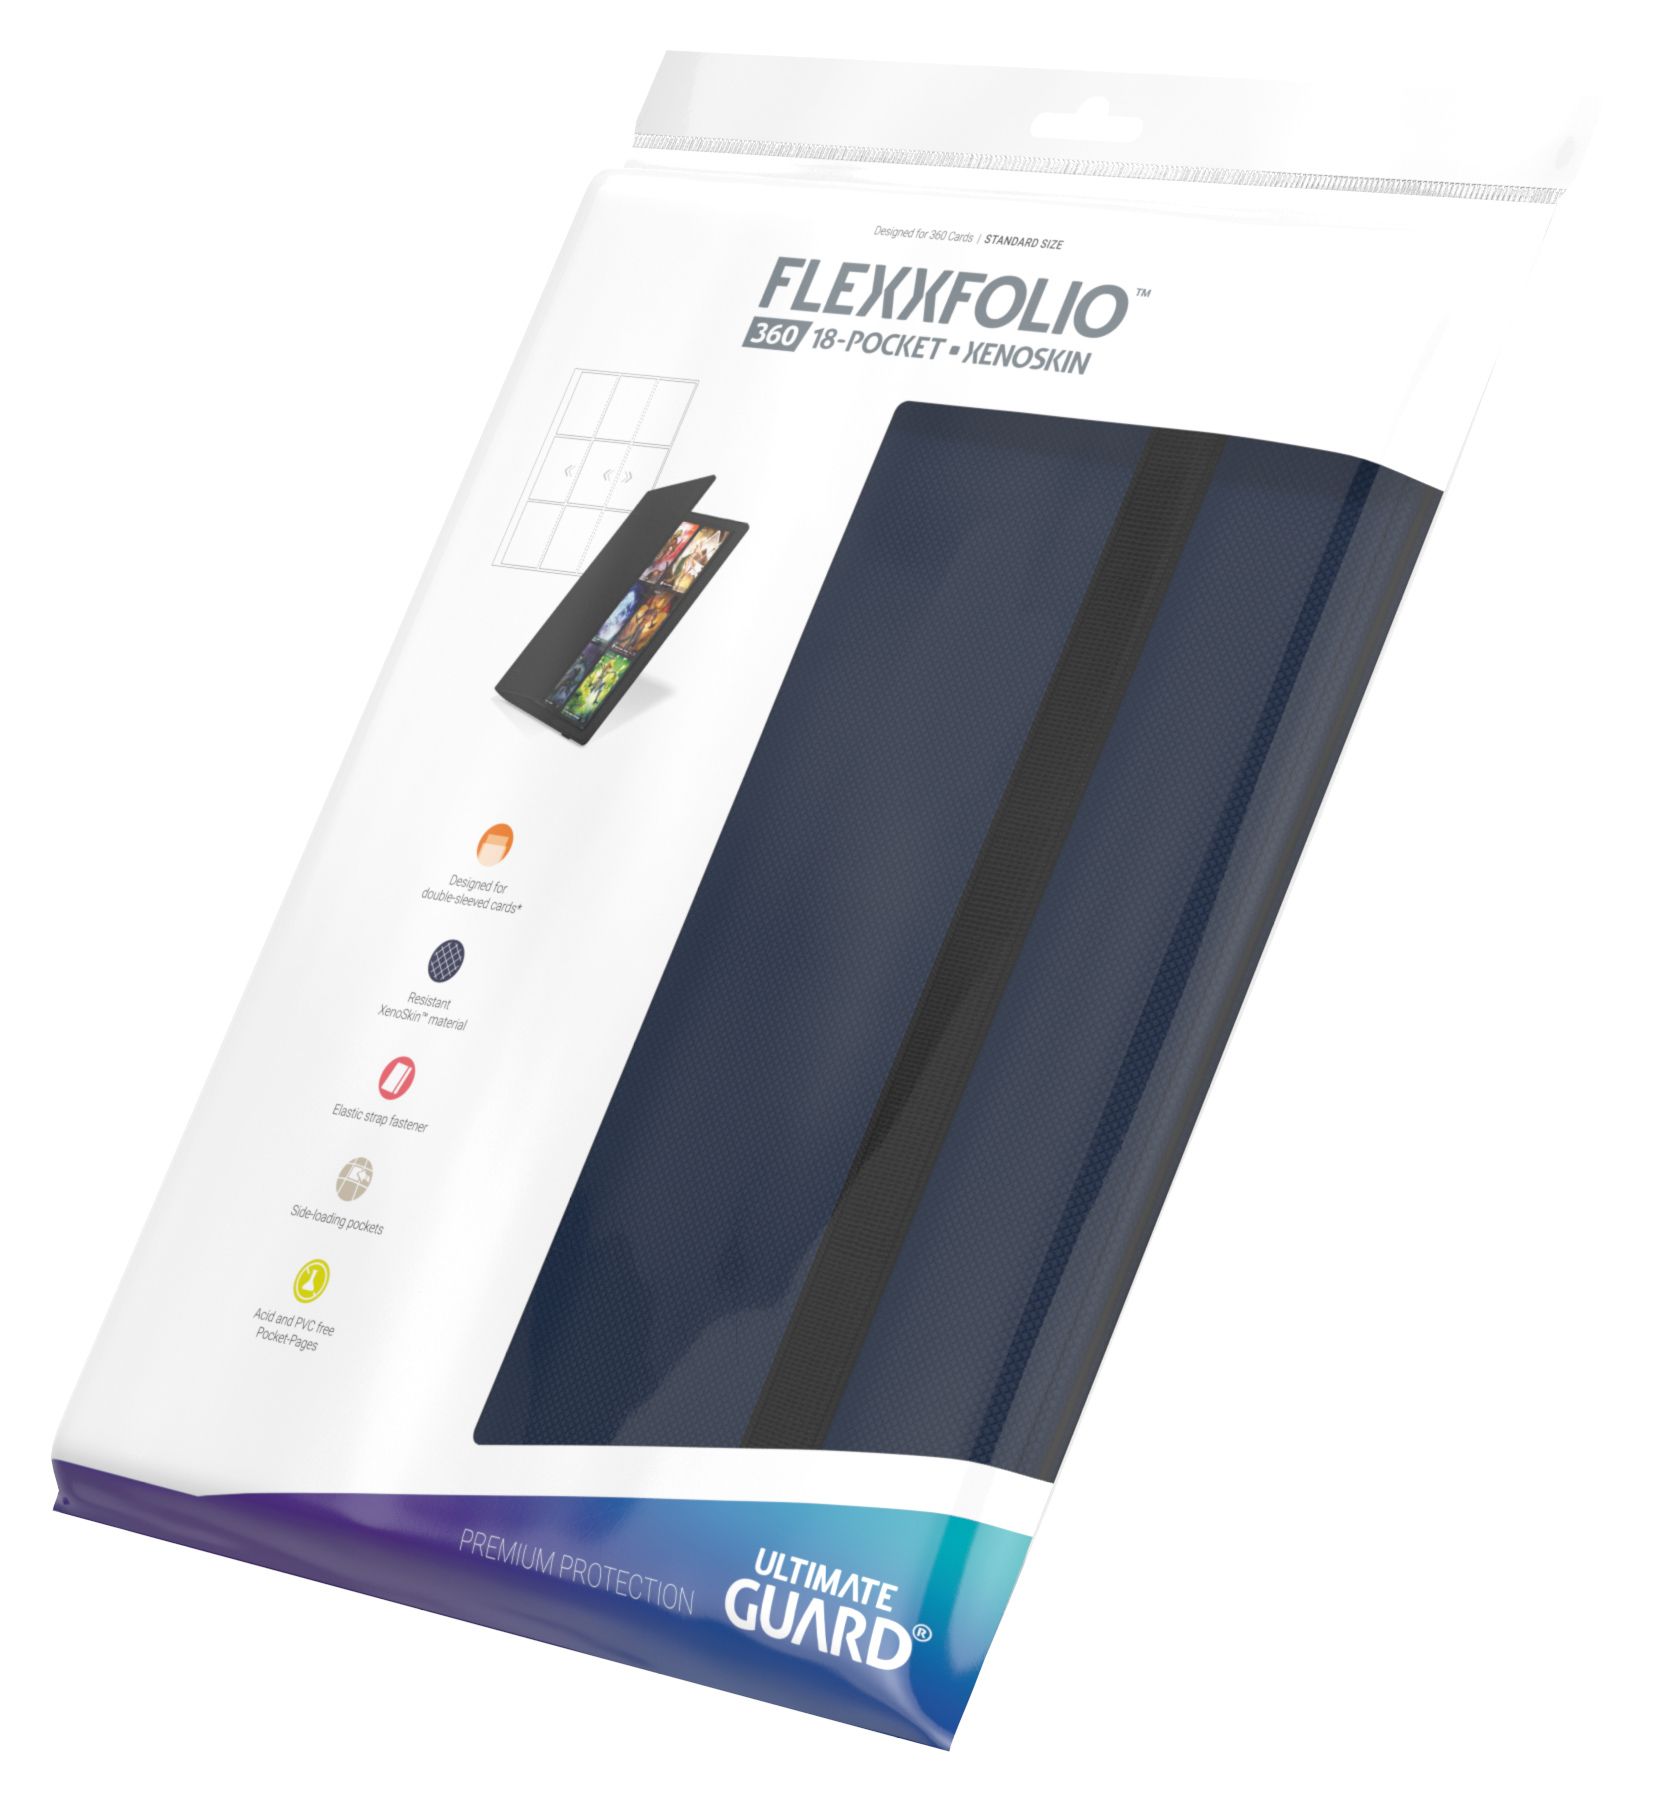 Ultimate Guard Flexxfolio Xenoskin 360, 9-Pockets